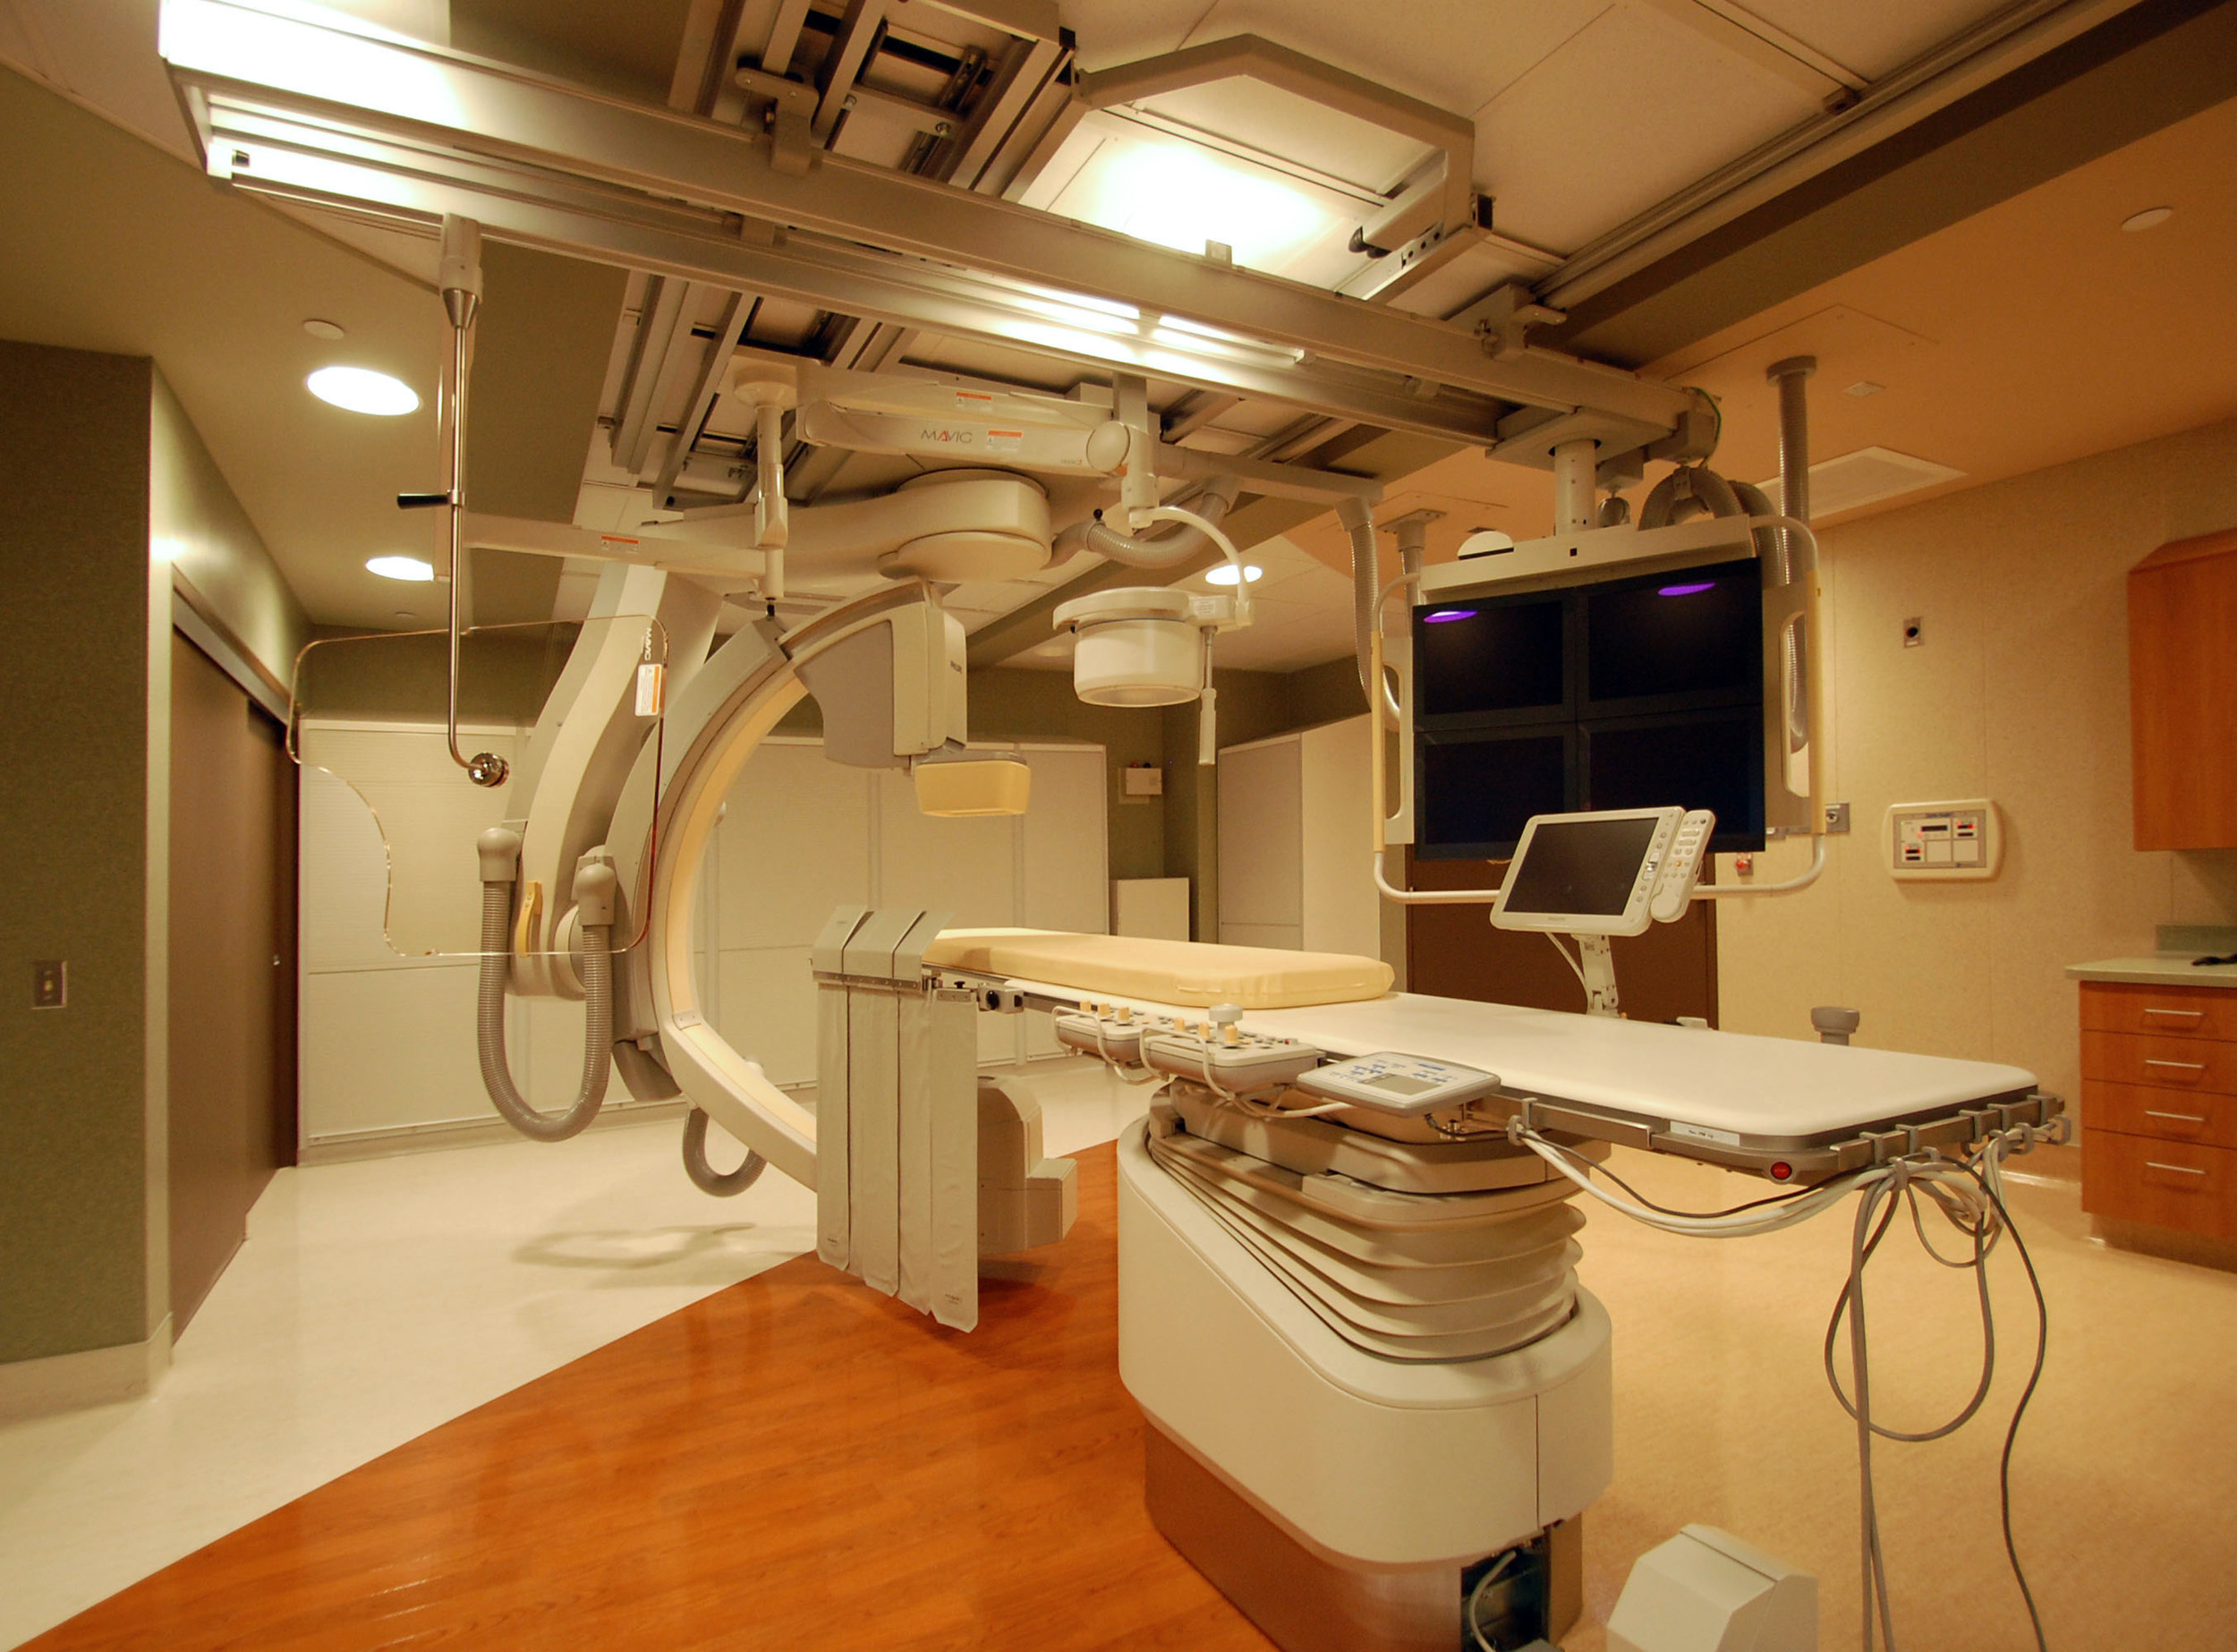   Health Care   Spaces for Diagnostics 